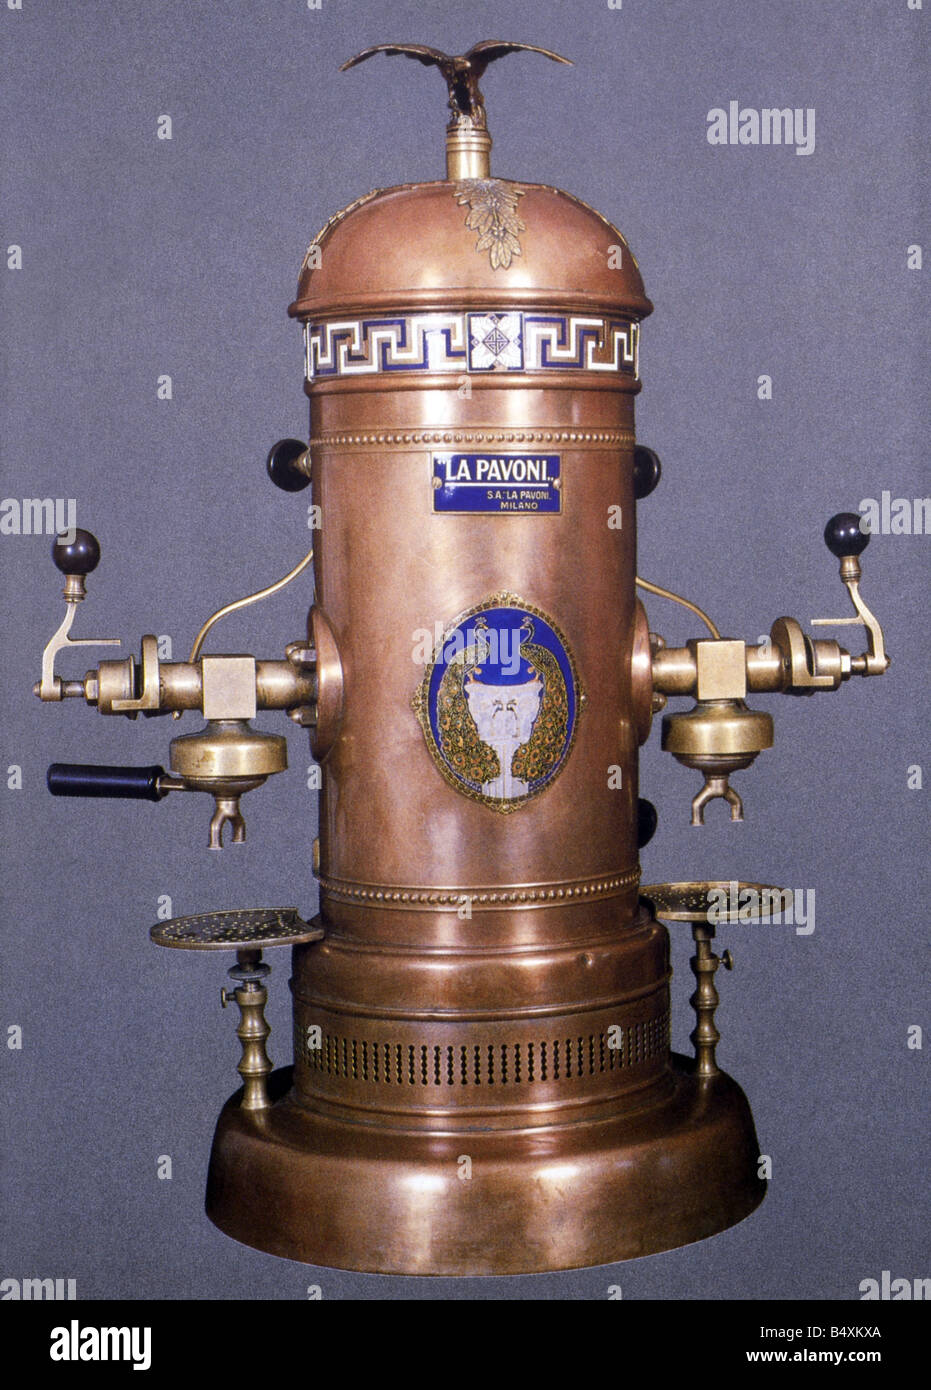 Gastronomie, Kaffee, alte Kaffeemaschine, Espressomaschine, Marke La Pavoni,  1920er Jahre Stockfotografie - Alamy